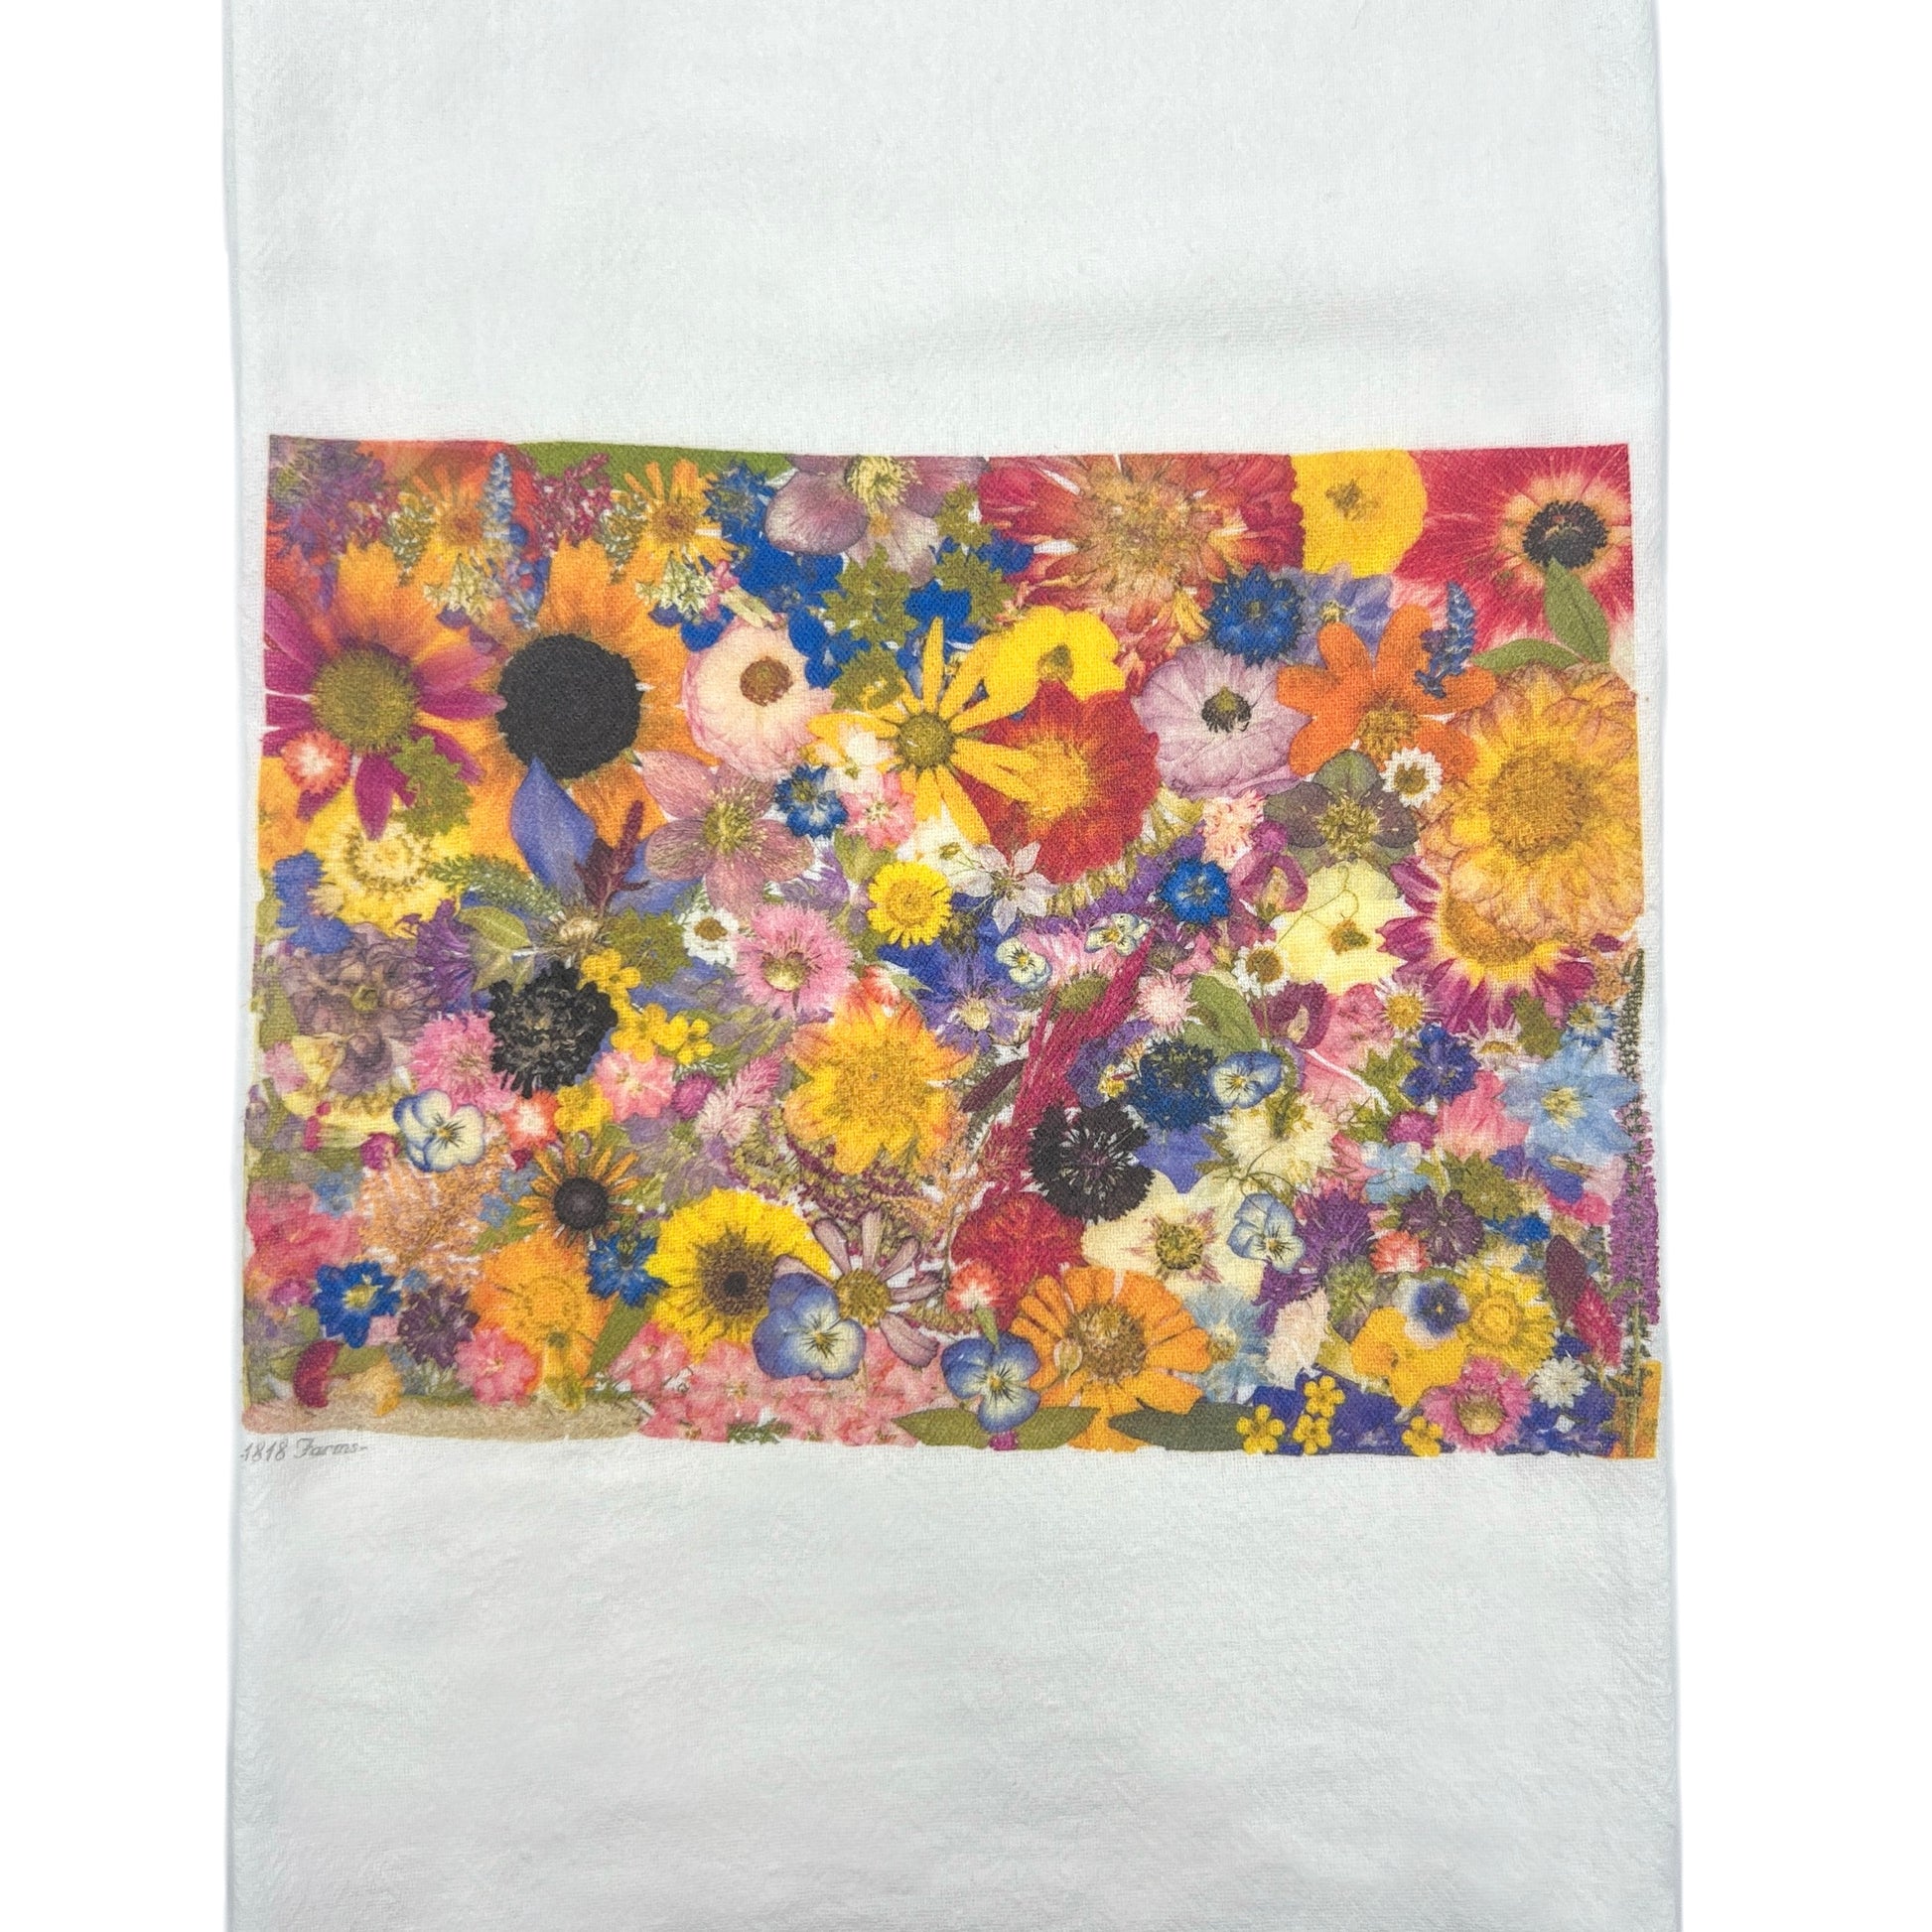 Colorado Themed Flour Sack Towel  - "Where I Bloom" Collection Towel 1818 Farms   